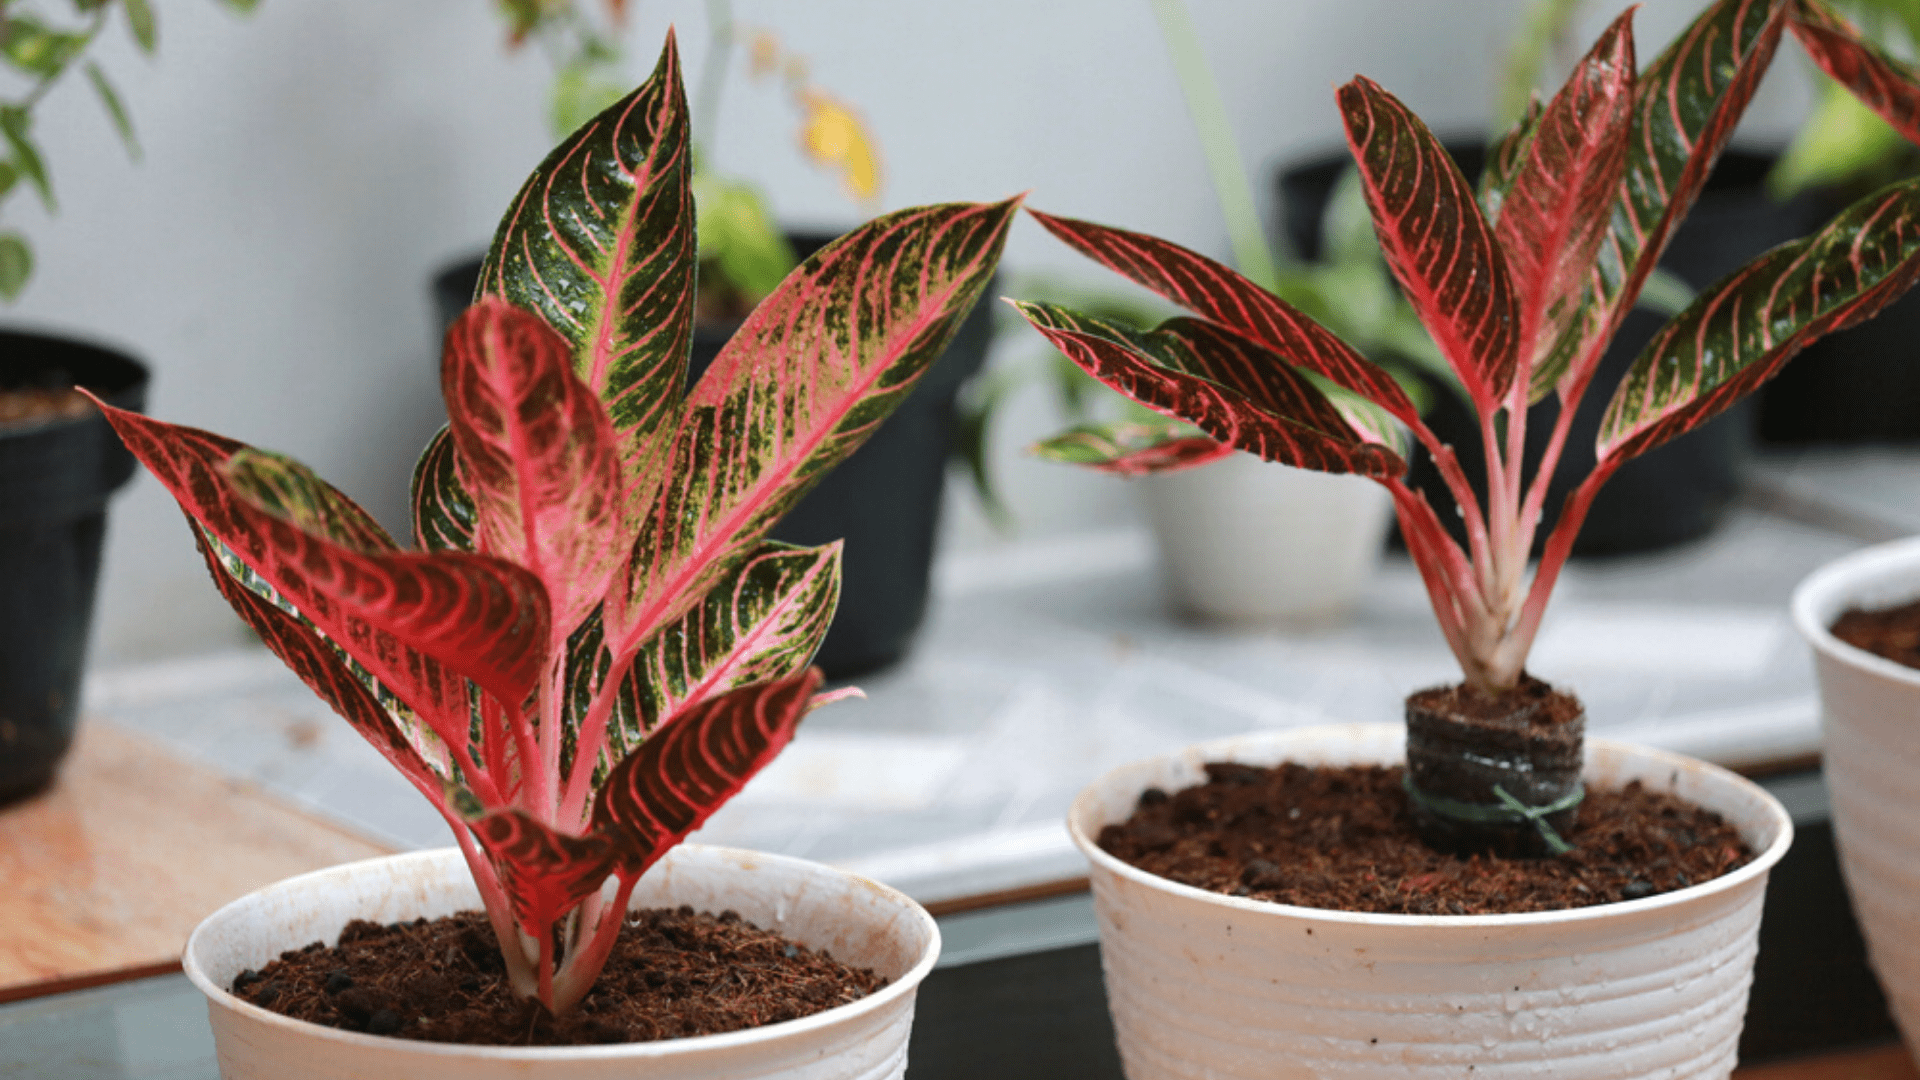 Plantas para casa: 10 espécies de plantas para cultivar dentro de casa